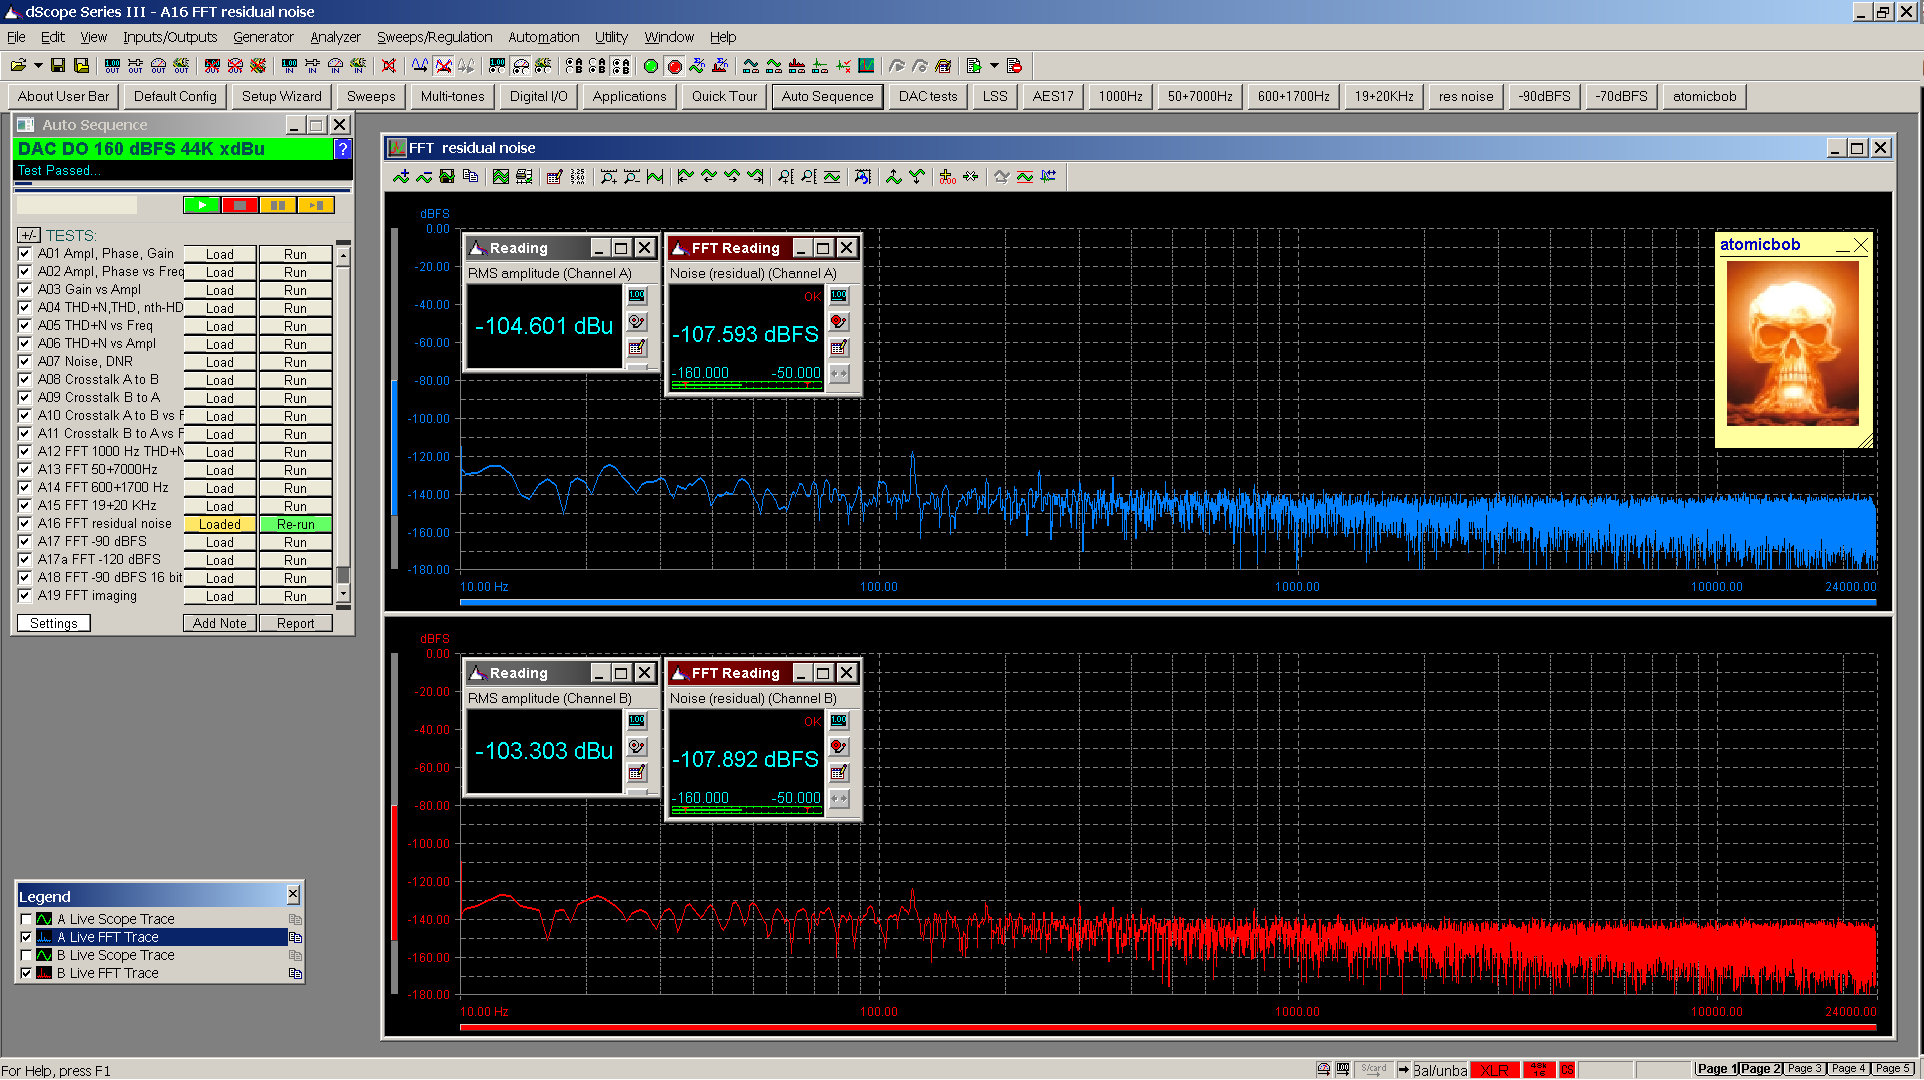 02 20210621 gamma2 residual noise FFT spdif SE - 180 dB range - t1.png